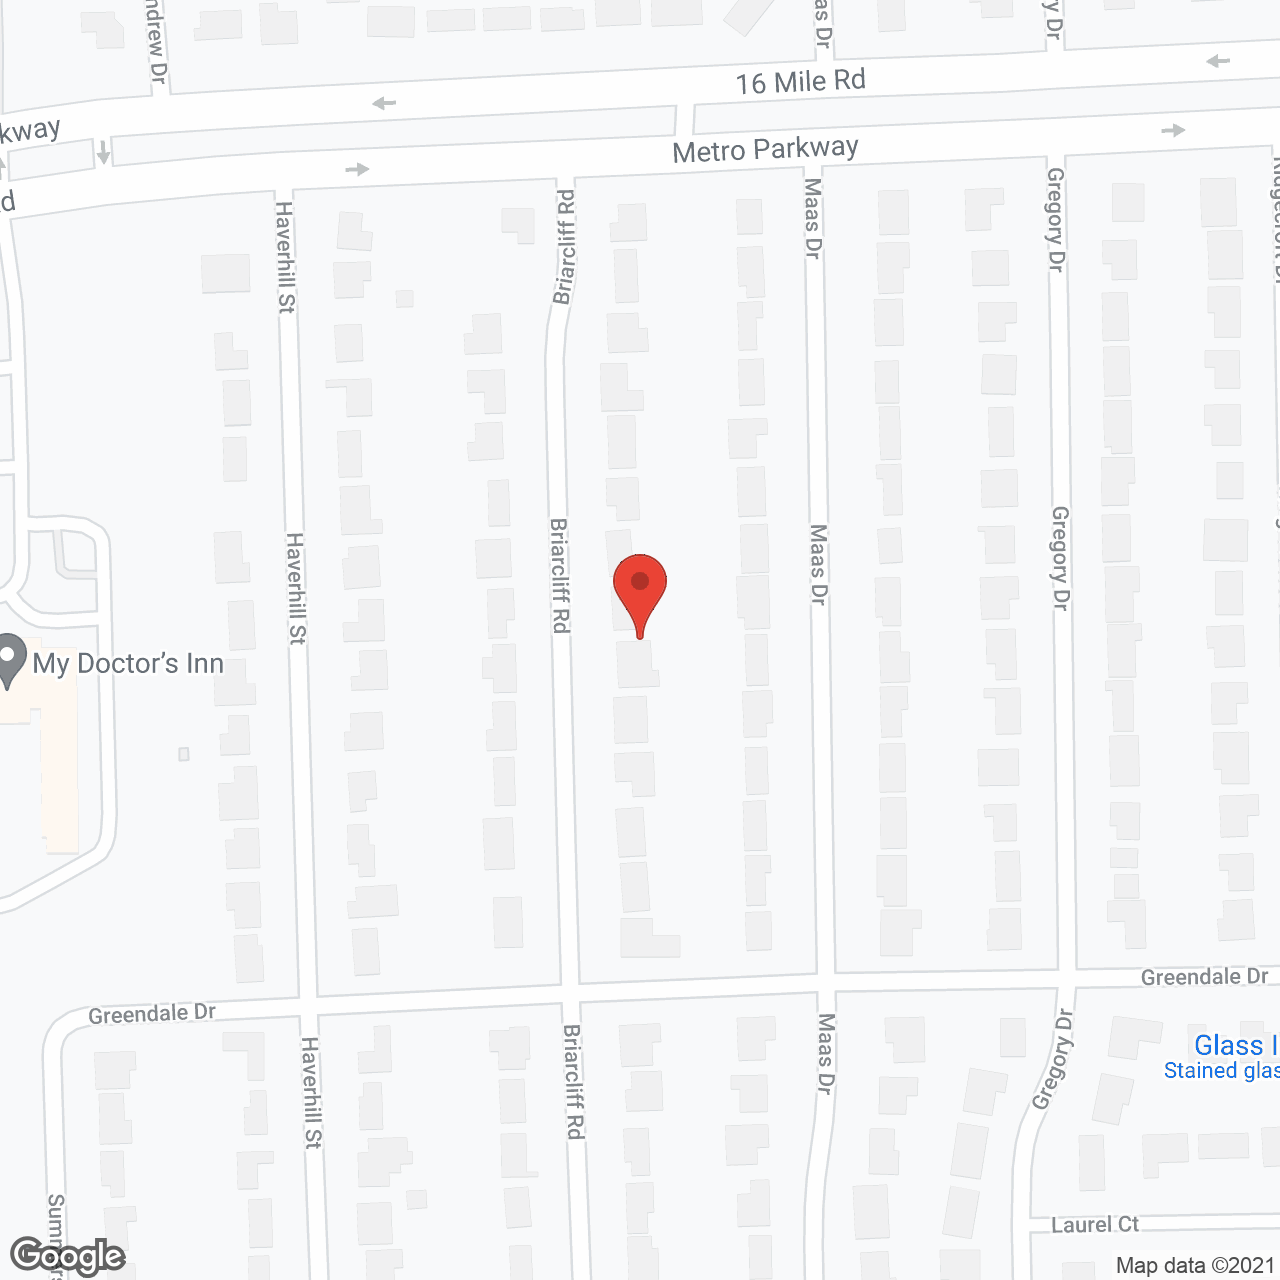 Hearthstone Communities - Sterling Heights in google map